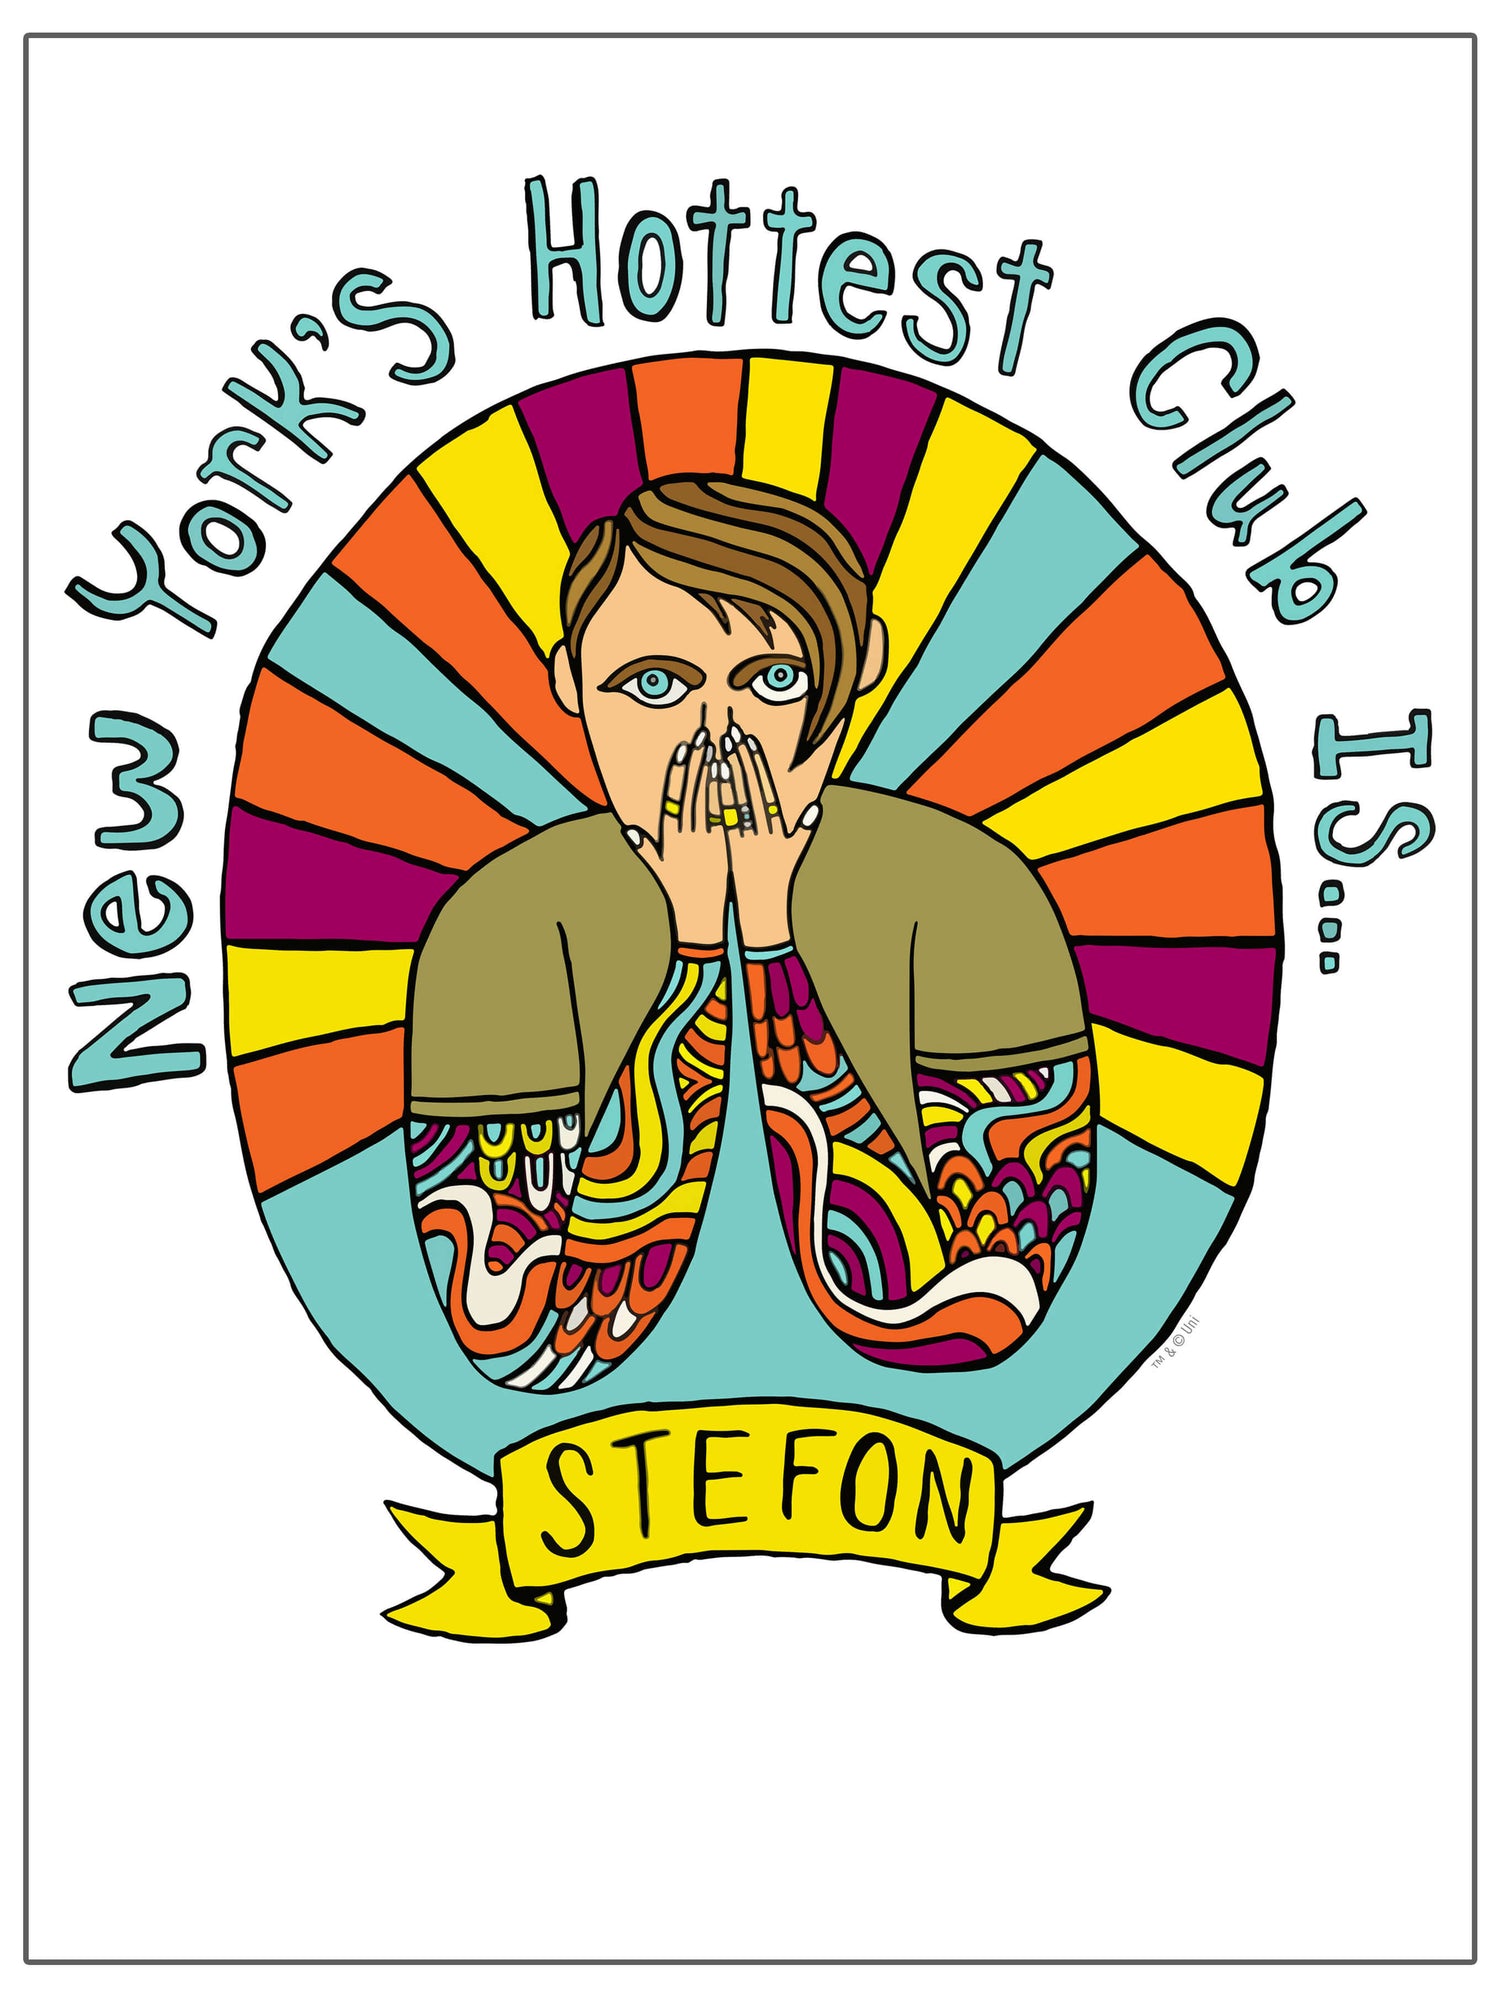 Saturday Night Live Stefon New York's Hottest Club Poster - 18x24